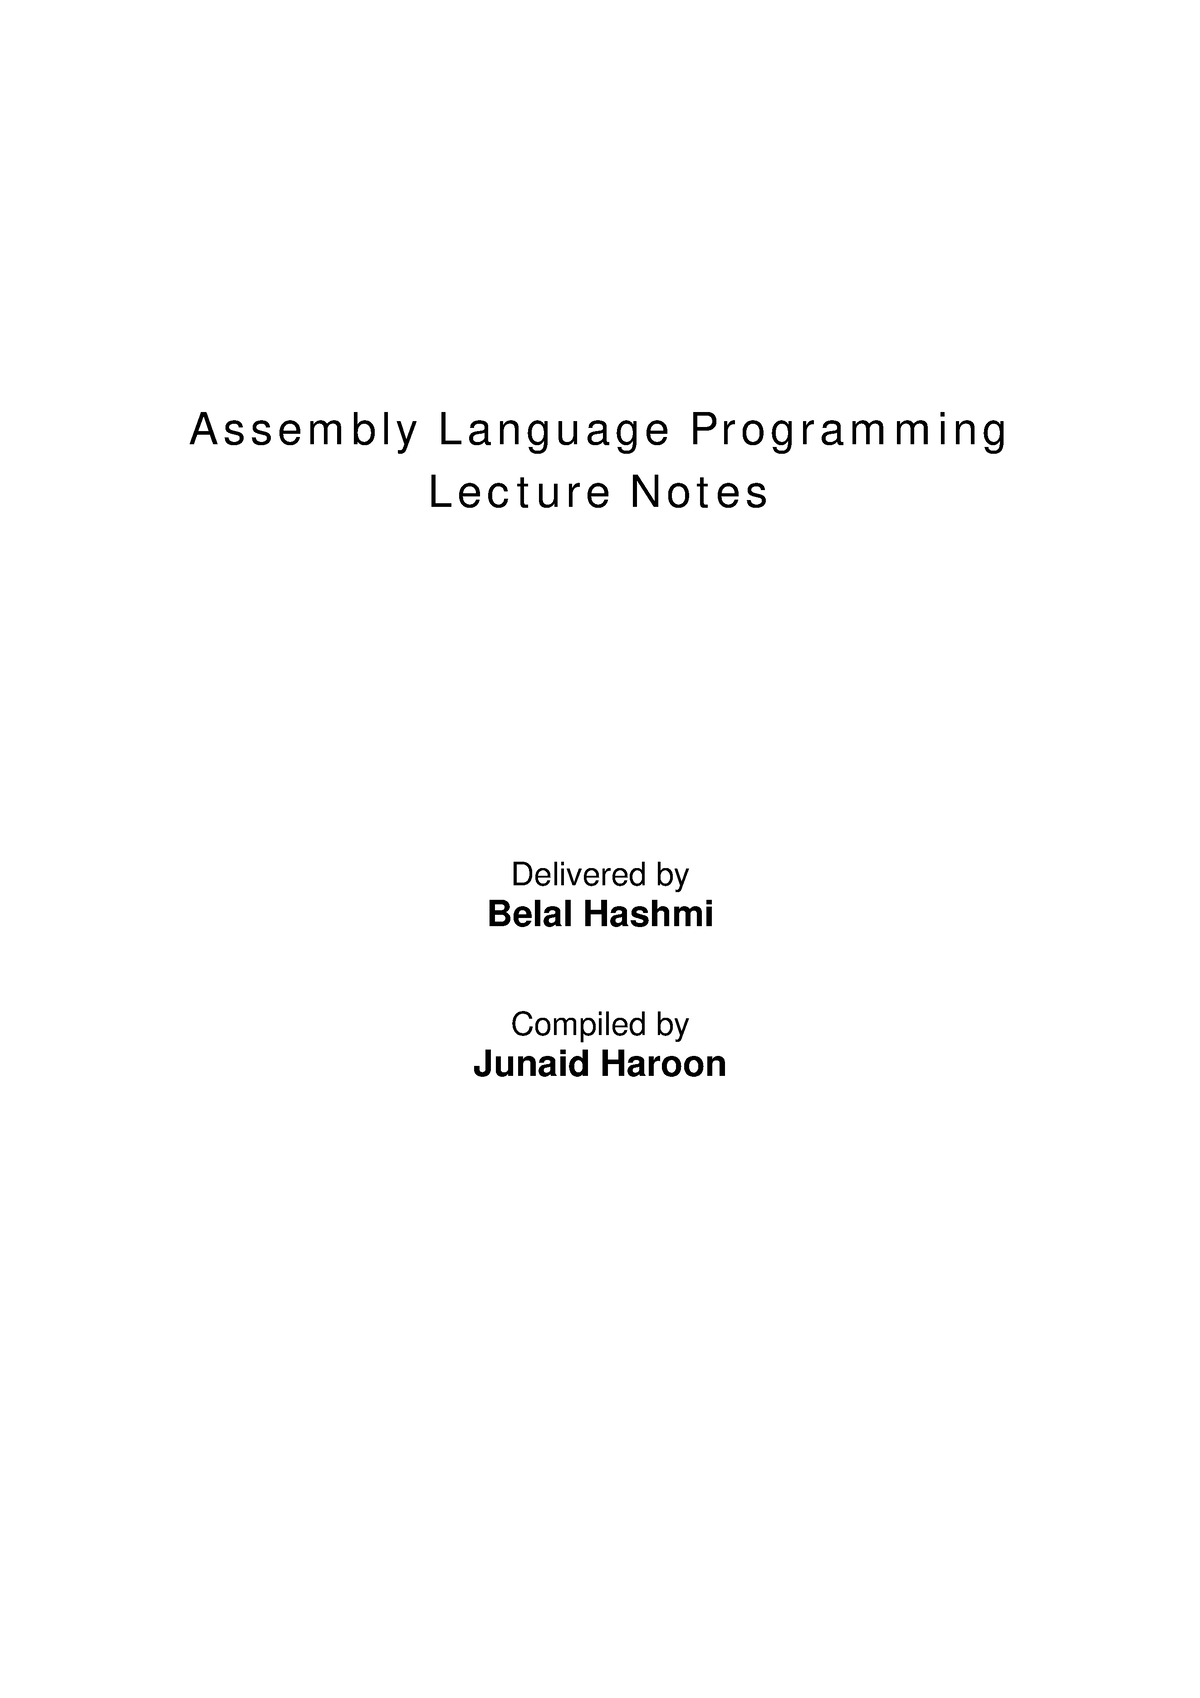 Assembly Language Programming Belal Hashmi A S S E M B L Y L A N G U A G E Pr O G R A M M I N